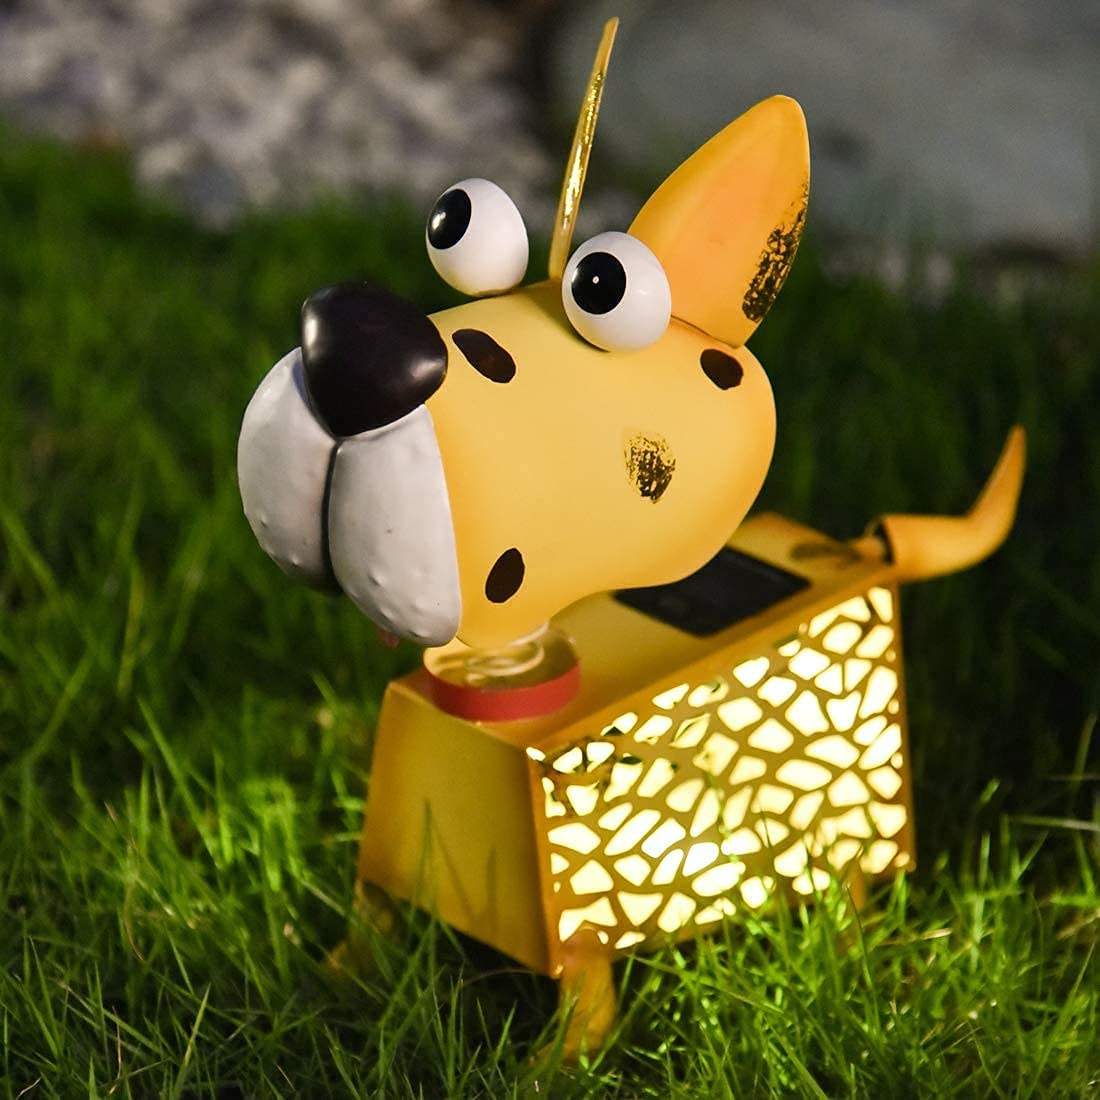 Outdoor Metal Garden Art Solar Animals Dog Figurine Lights For Patio Lawn Backyard Pathway Decor